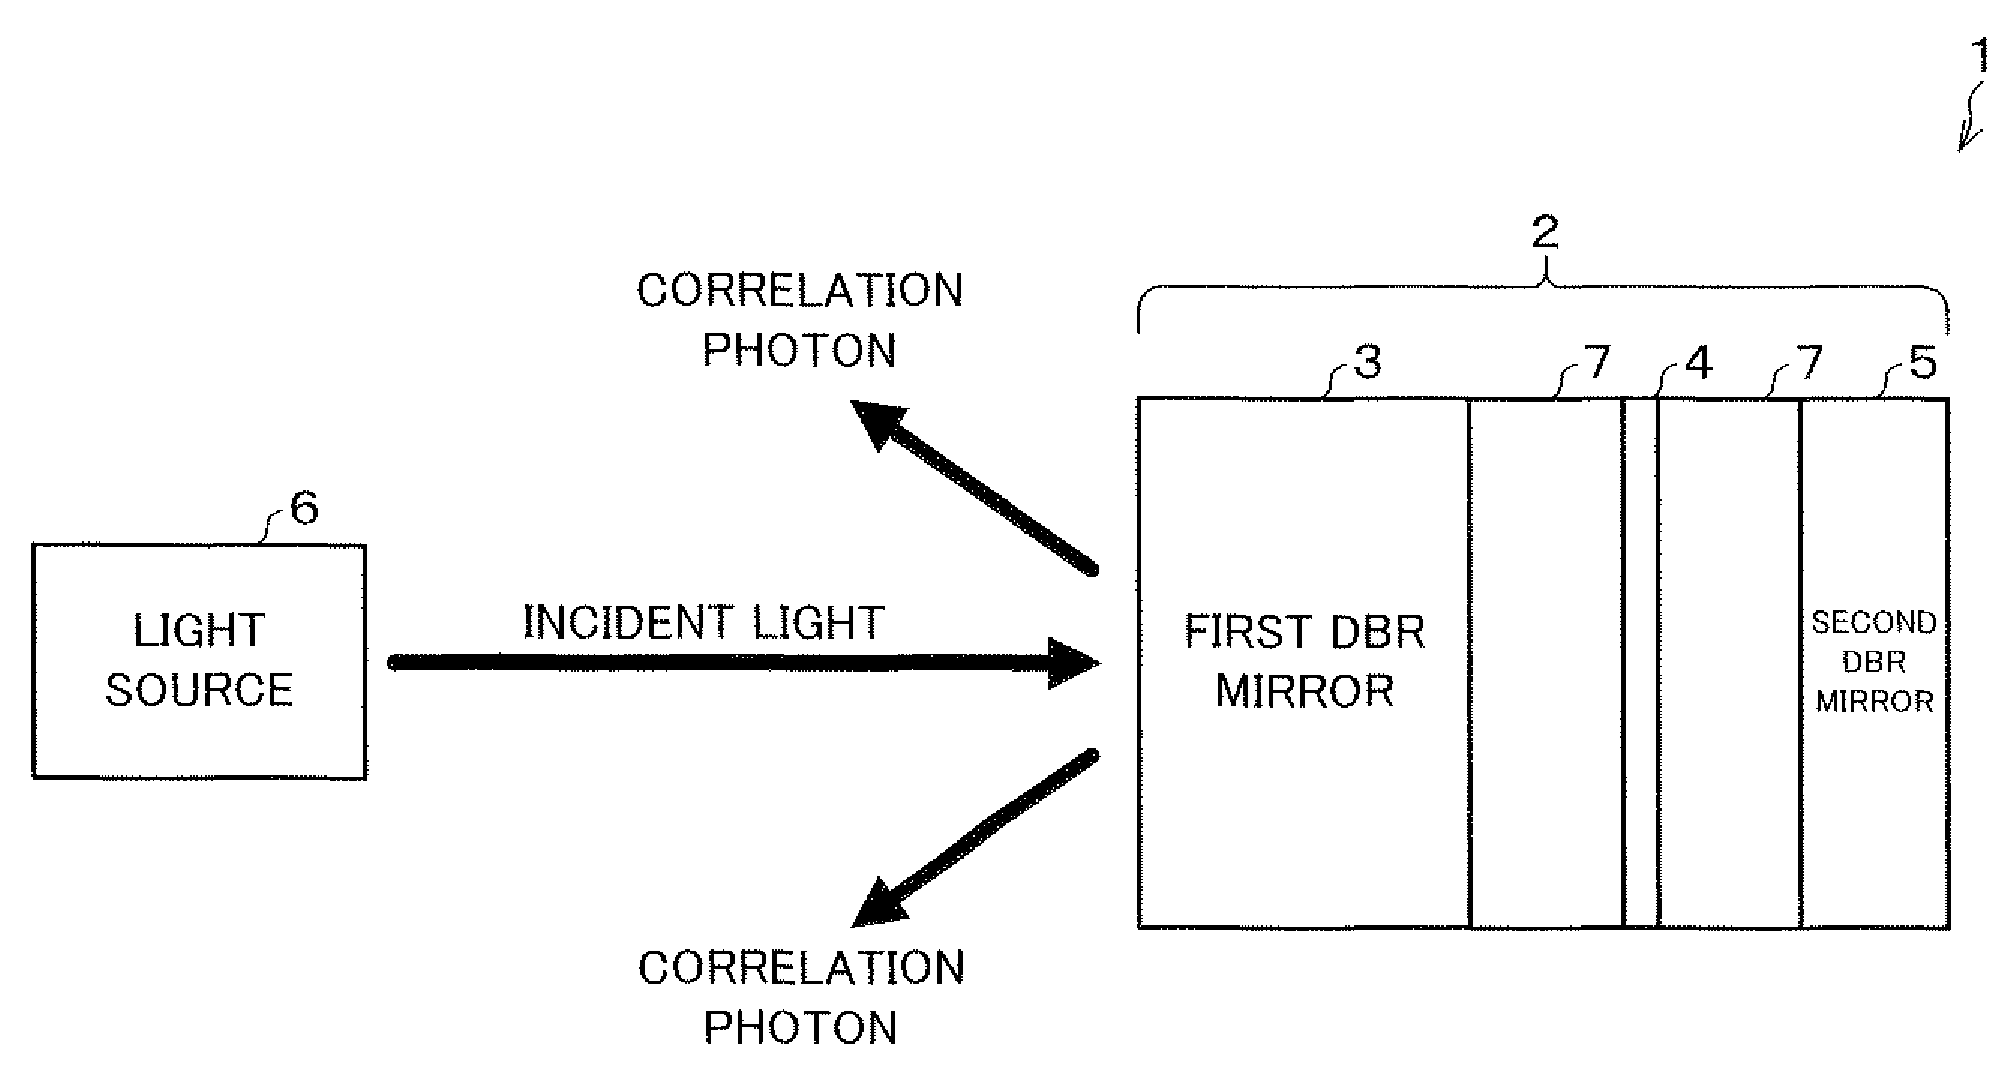 Photon pair generating device